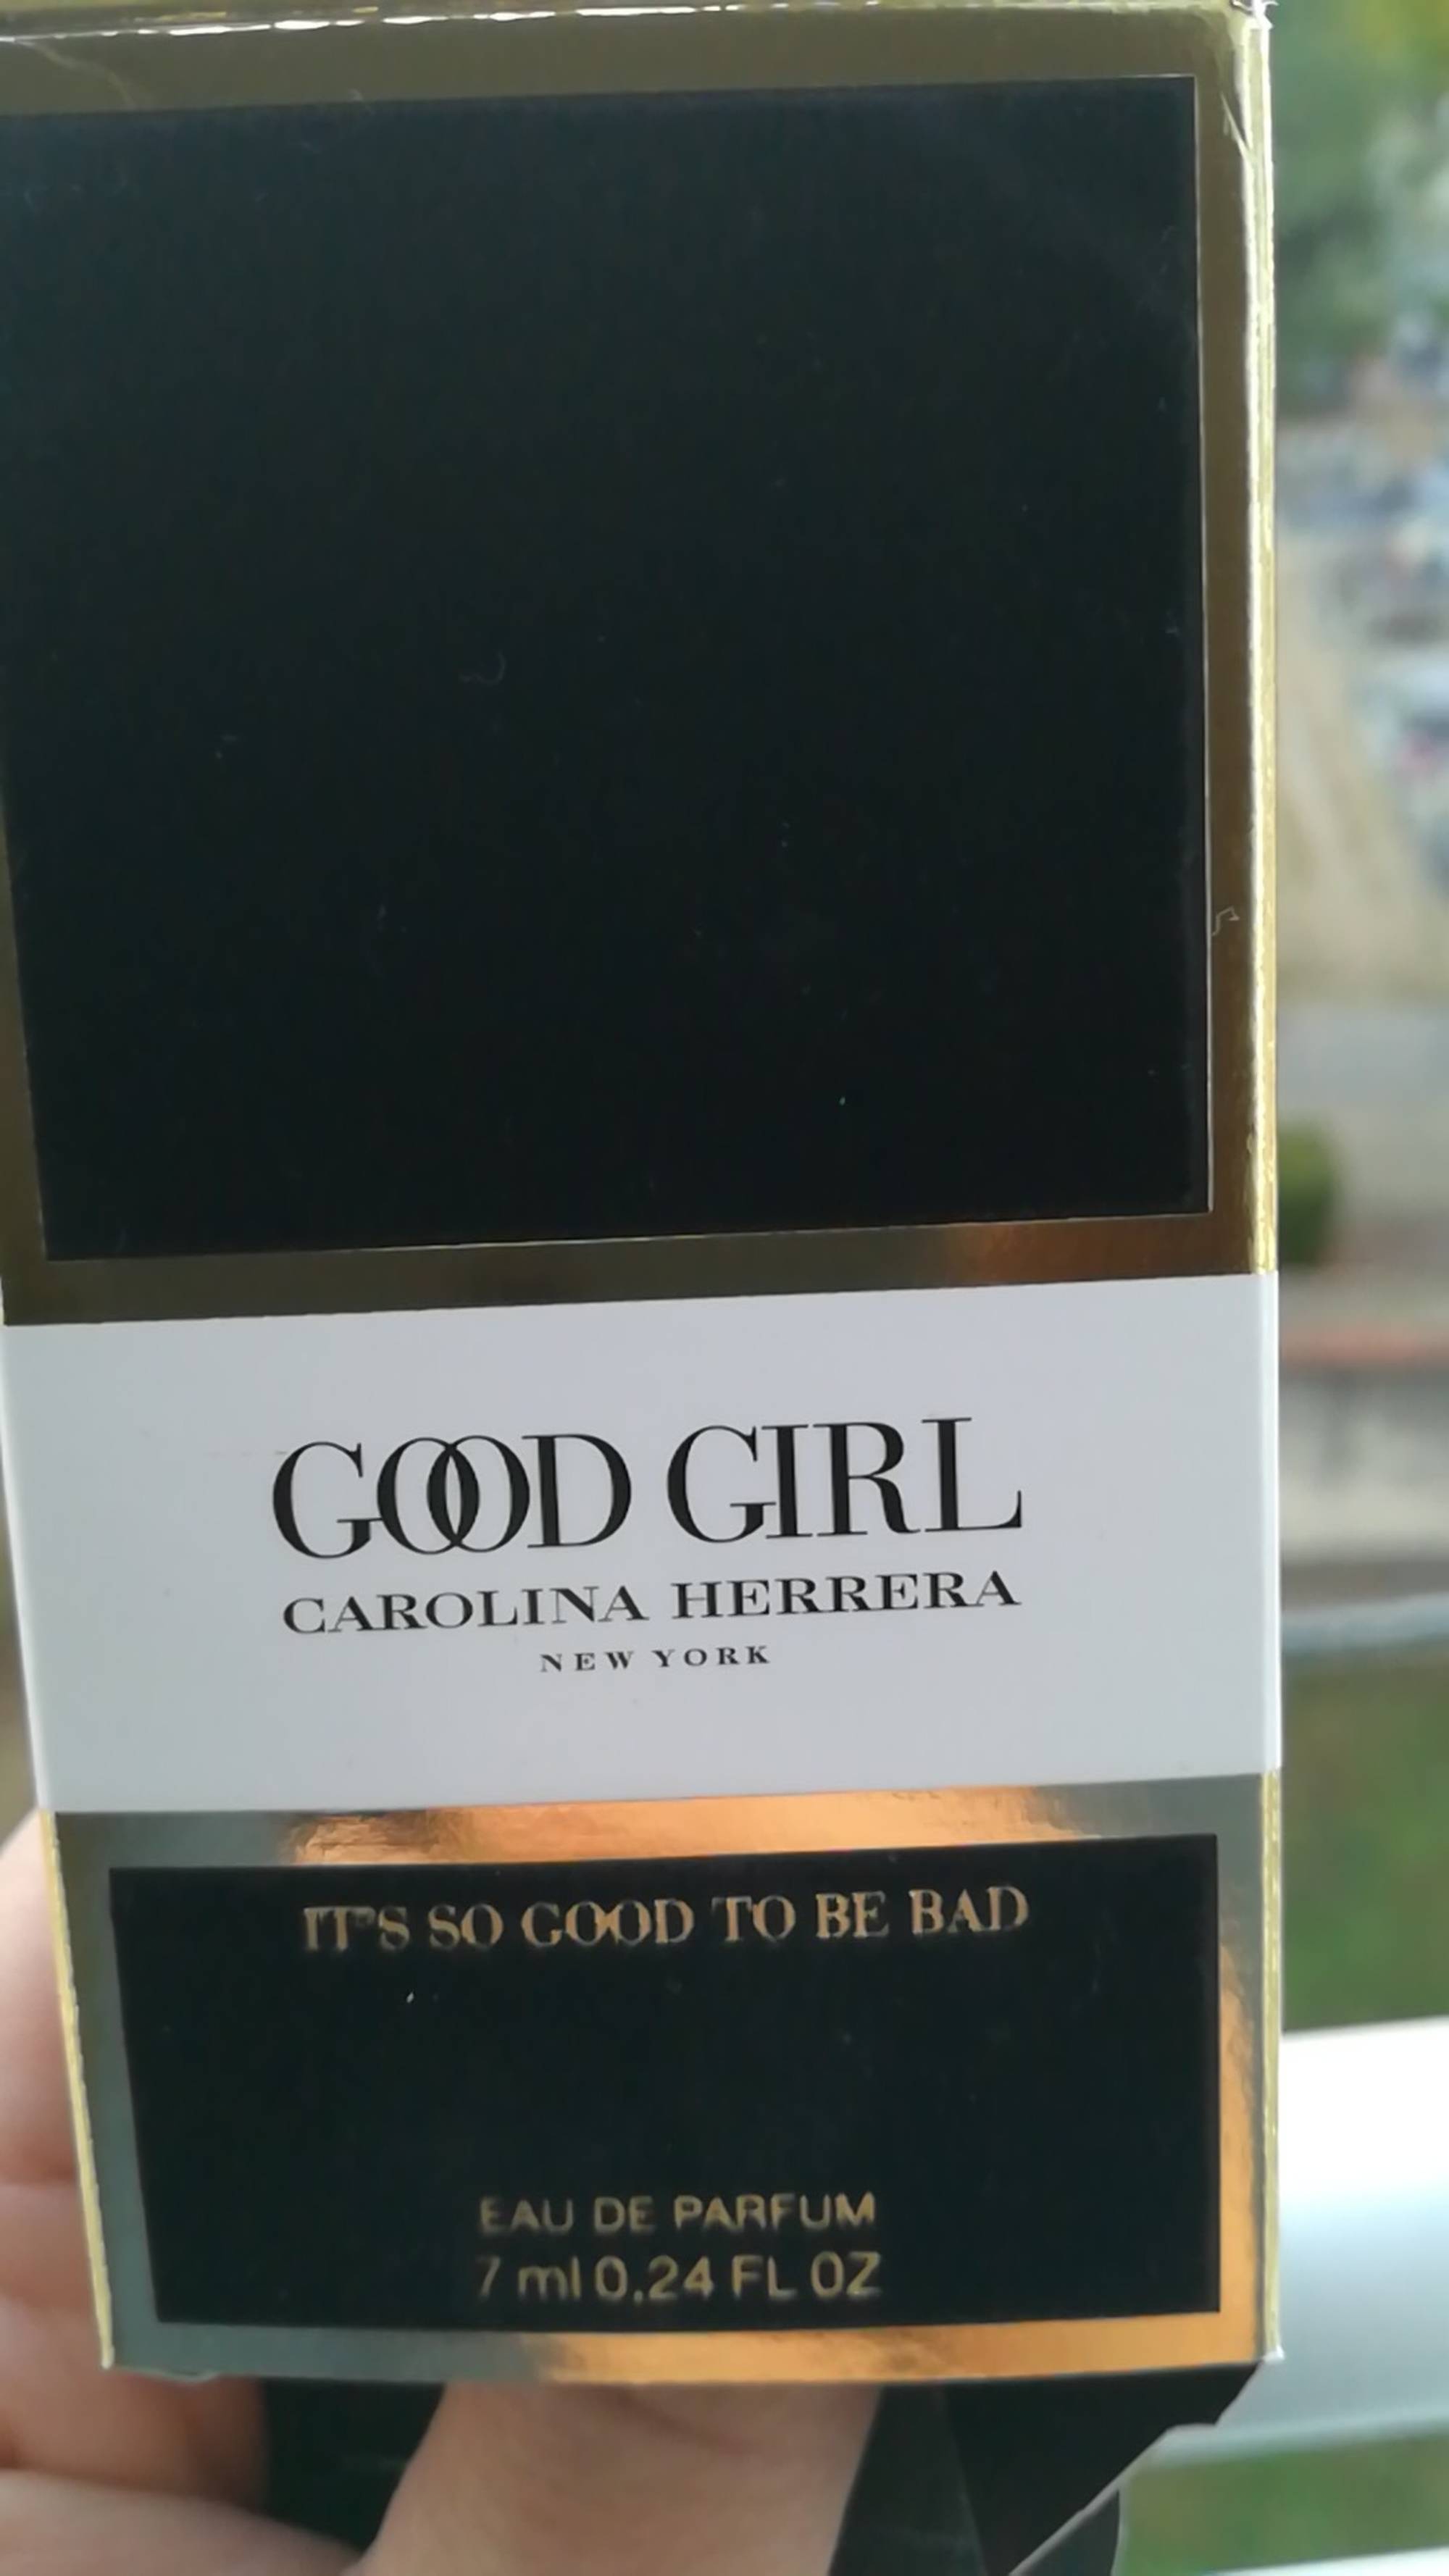 CAROLINA HERRERA - Good Girl - It's so good to be bad - Eau de parfum